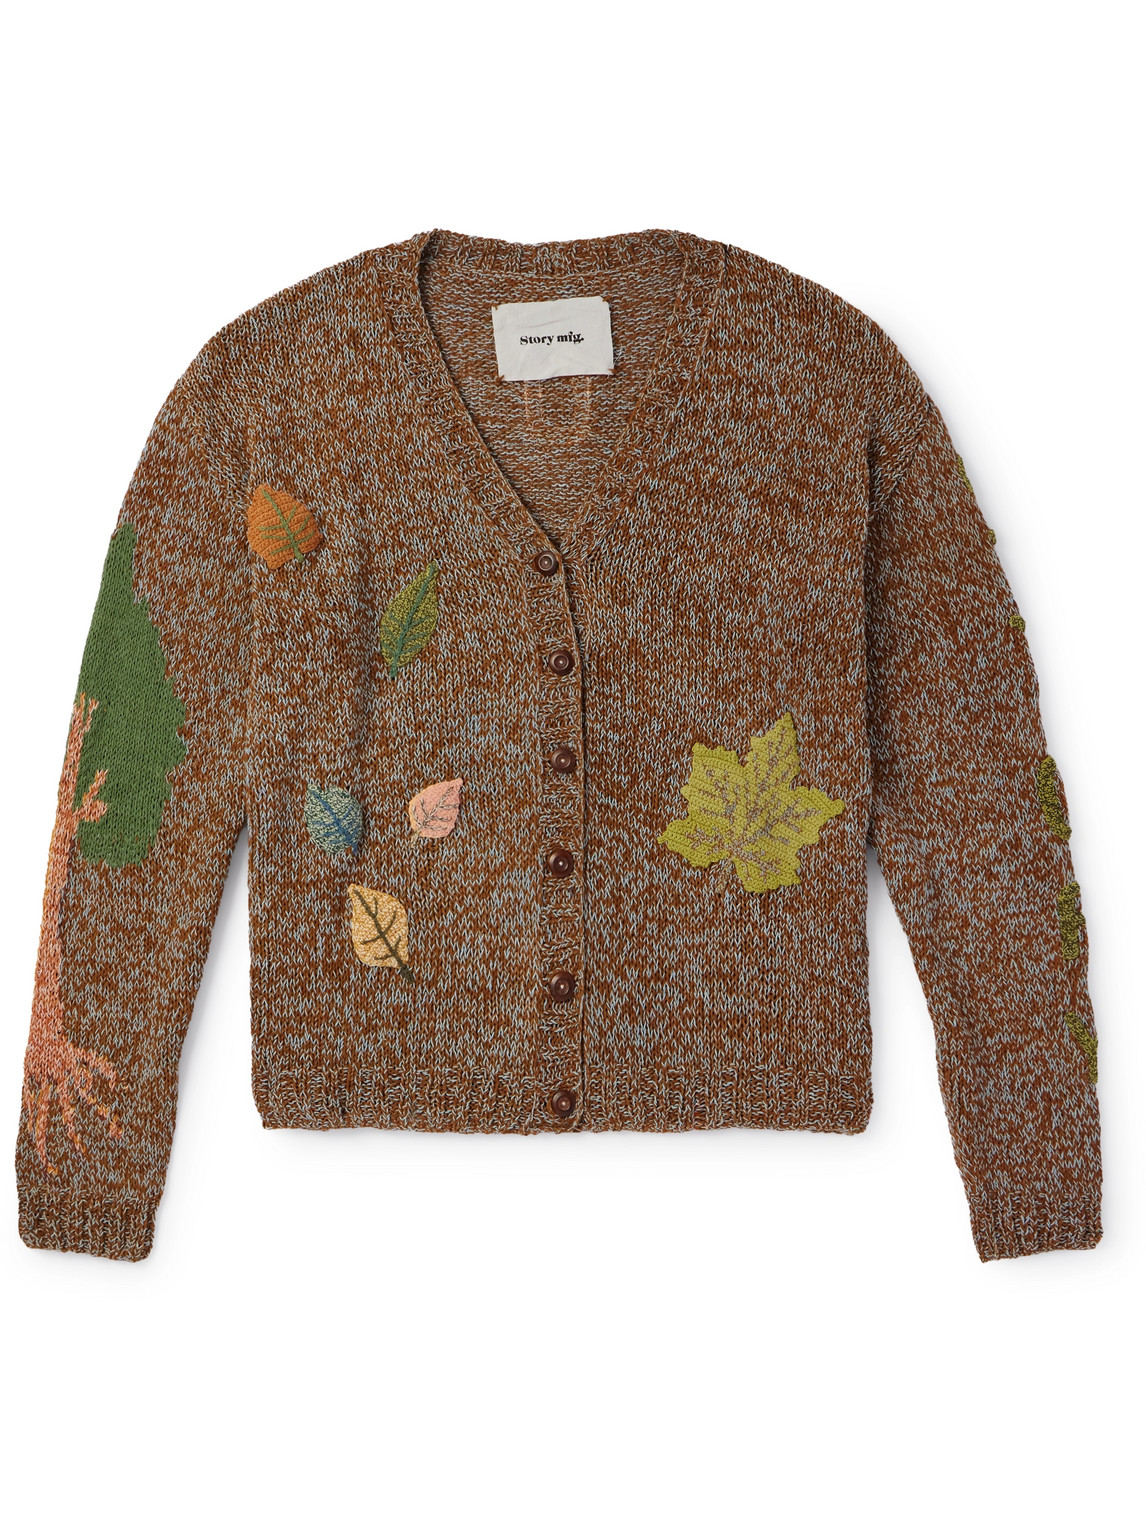 Story Mfg. Twinsun Crocheted Organic Cotton Cardigan In Brown